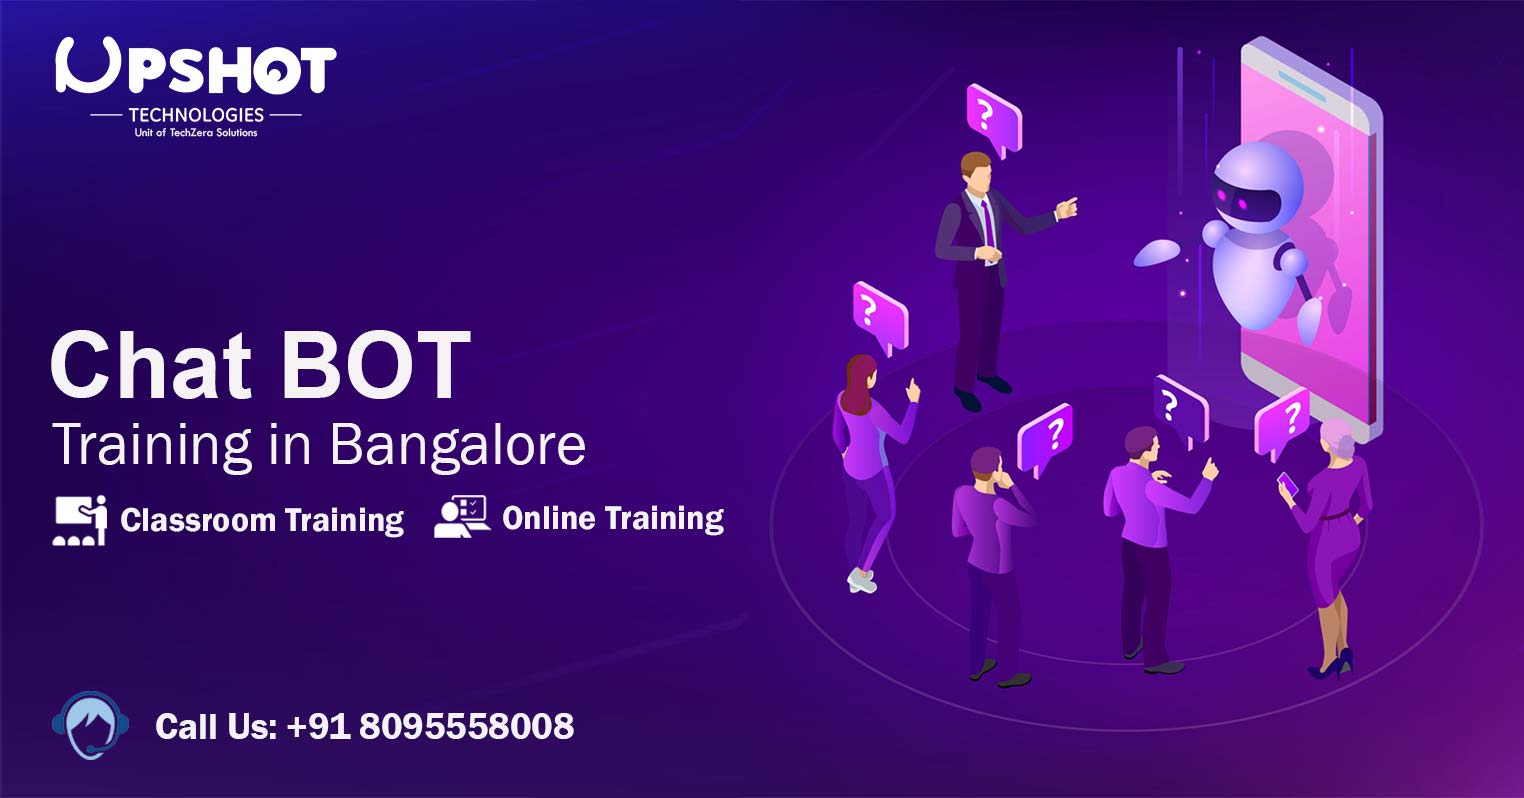 Chatbot Training in bangalore